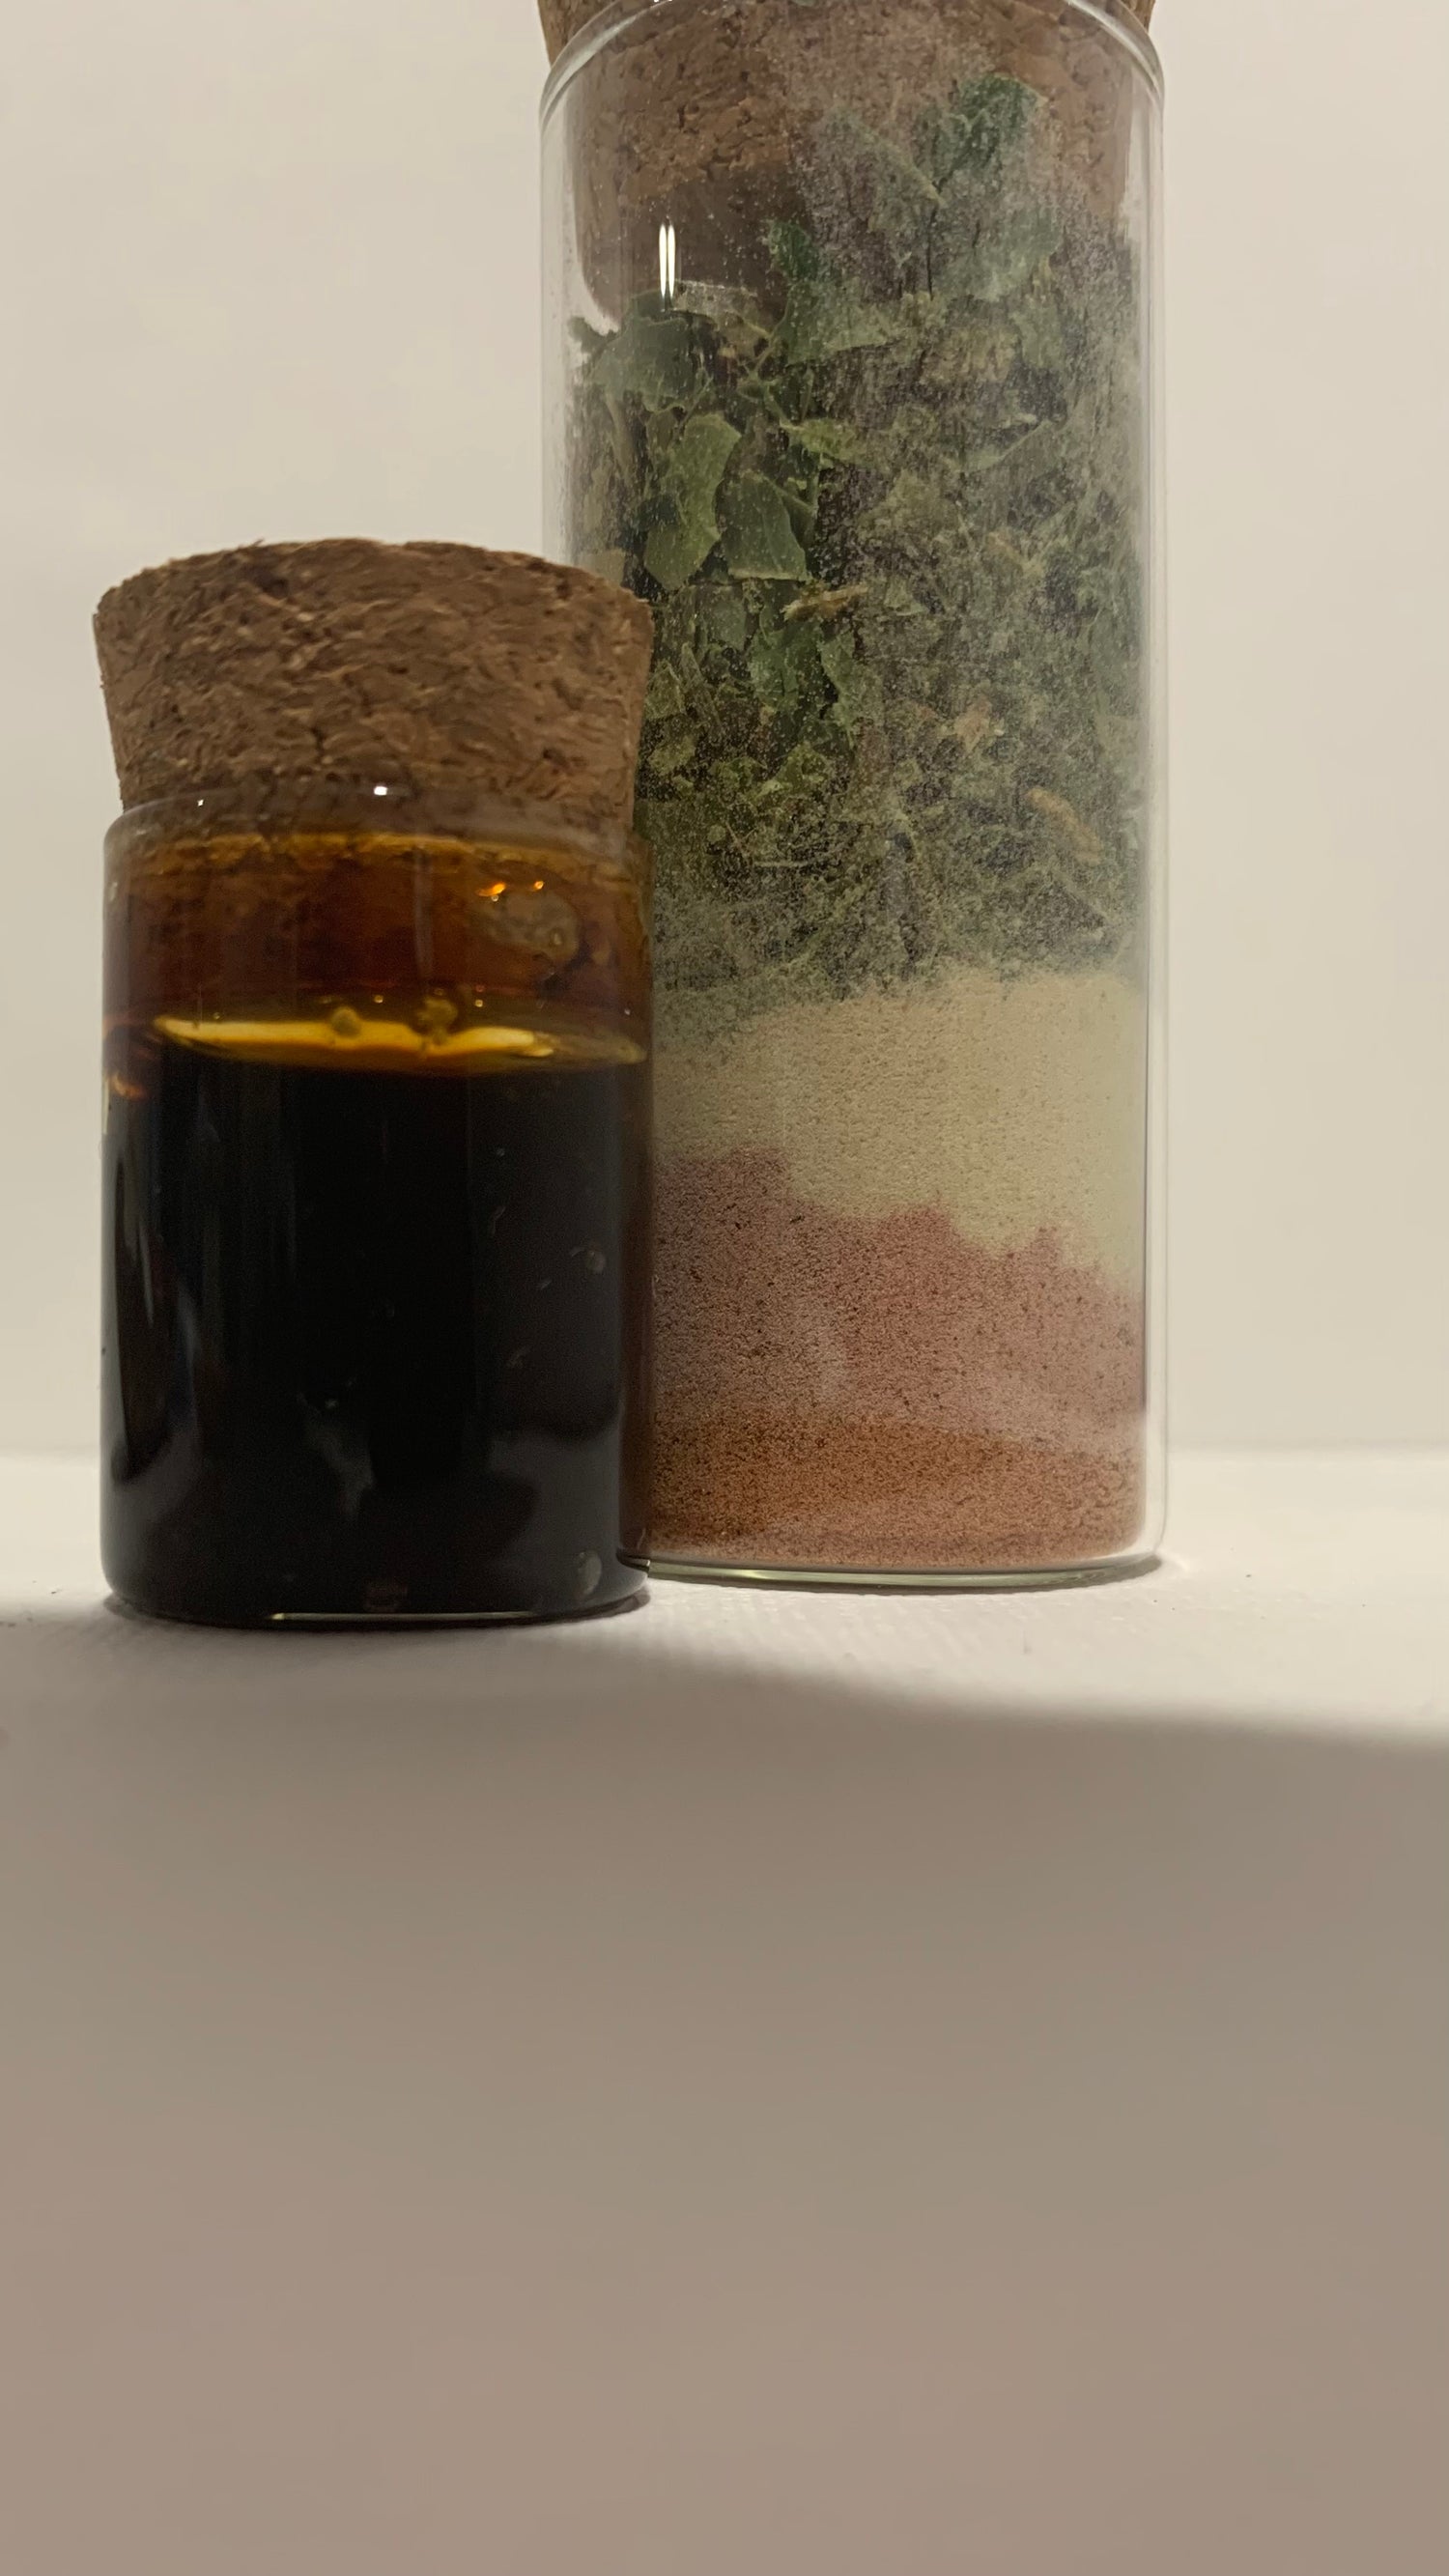 Bush Medicine Shots Tea and Packs